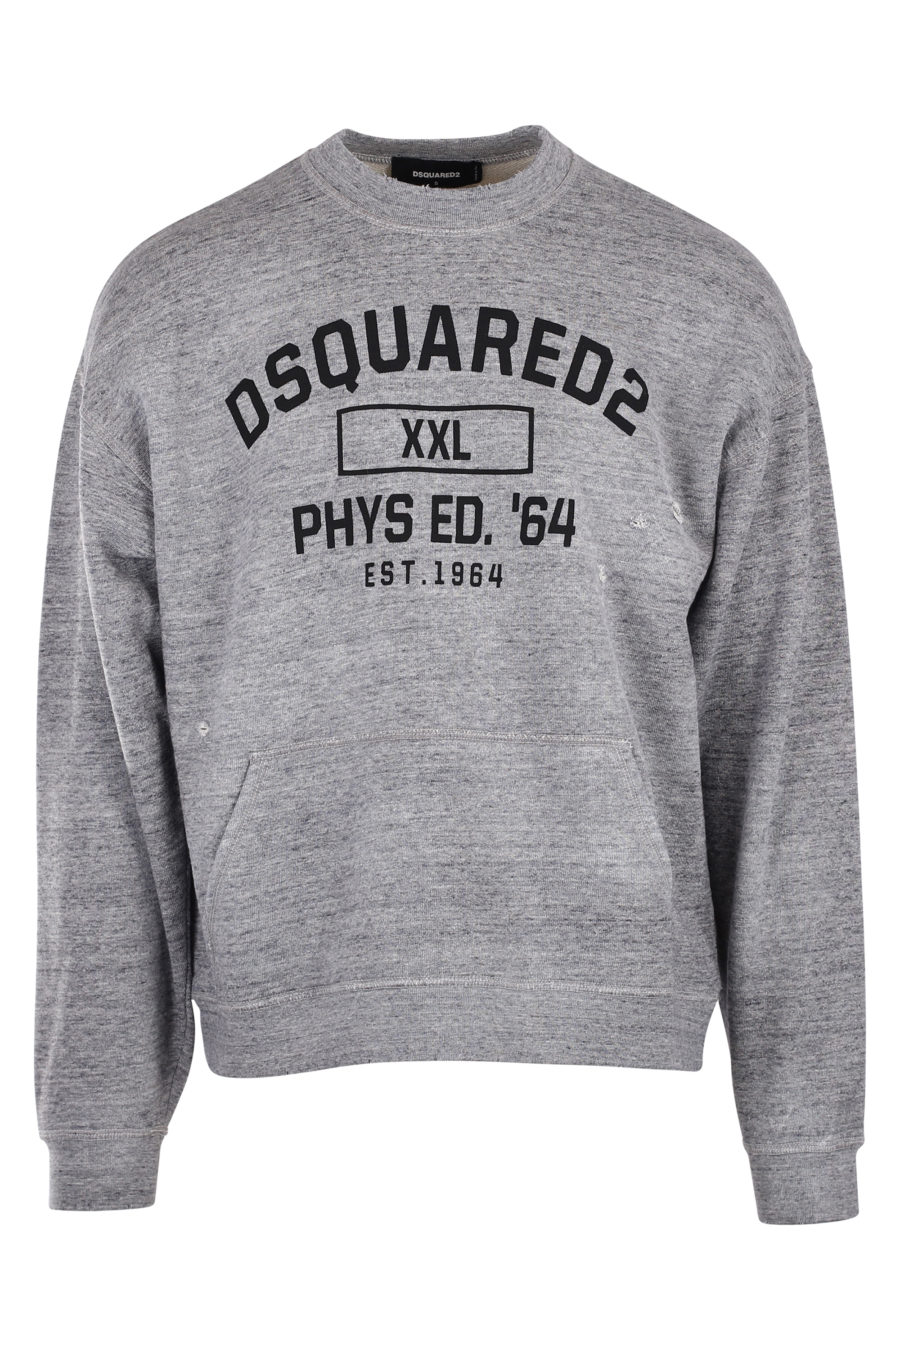 Sudadera gris con logo "phys ed 64" negro - IMG 9950